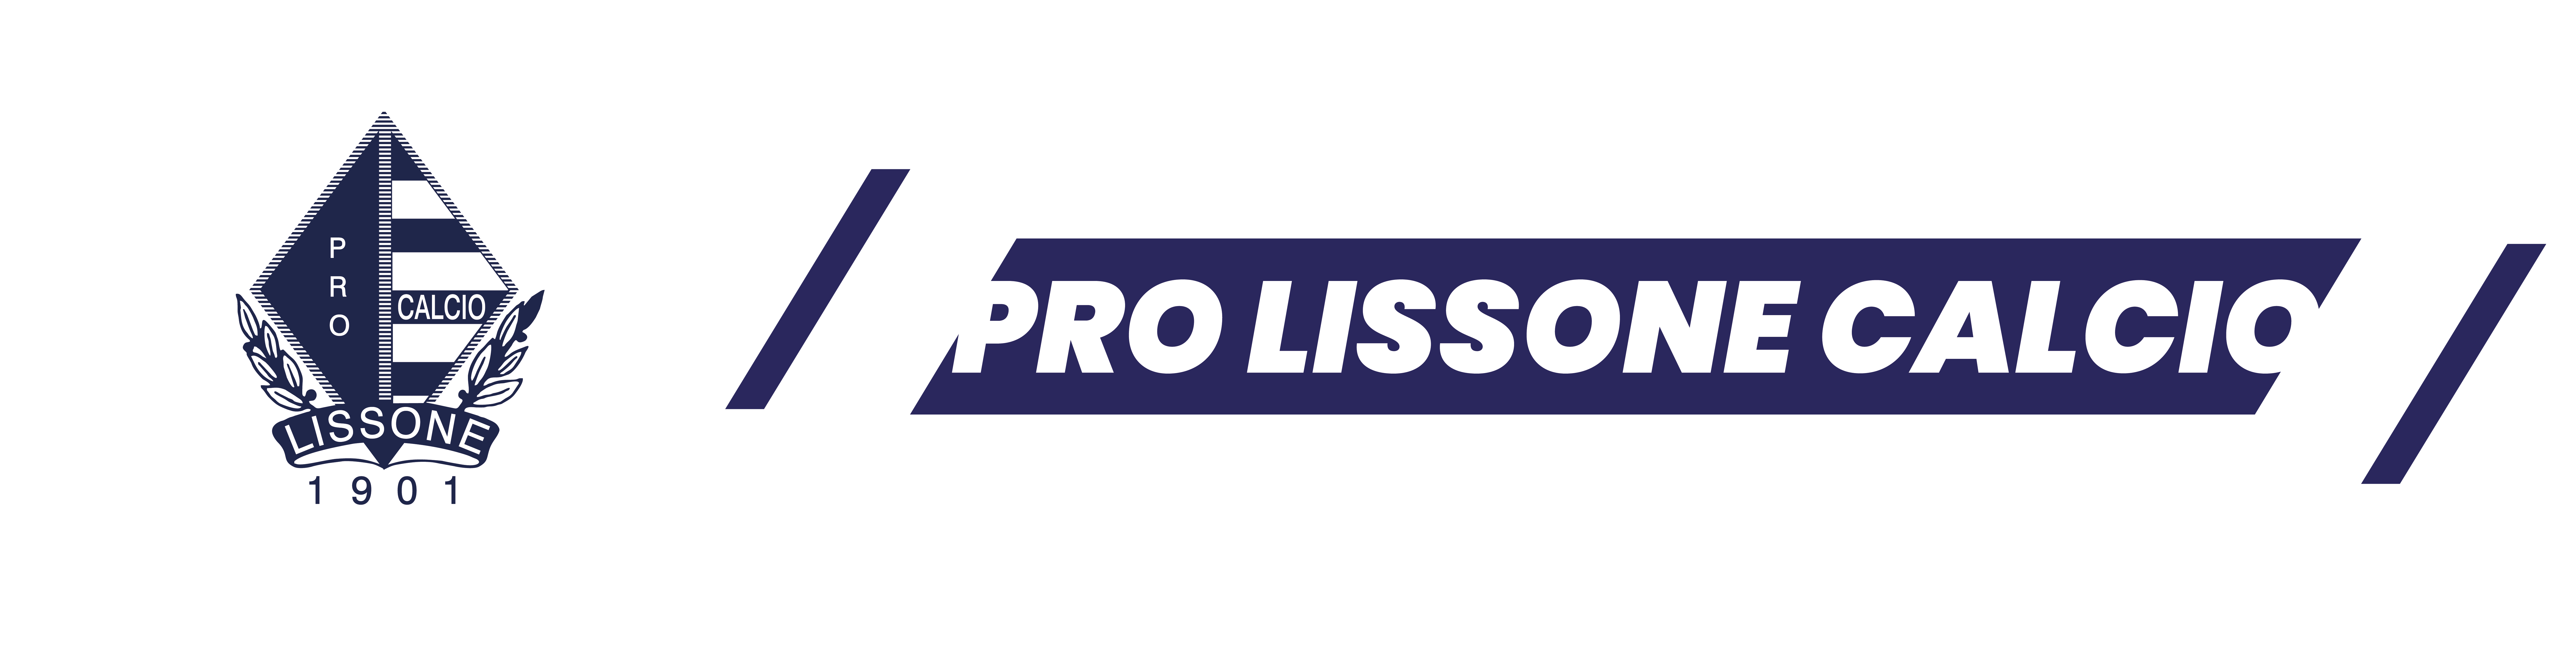 SSD Pro Lissone